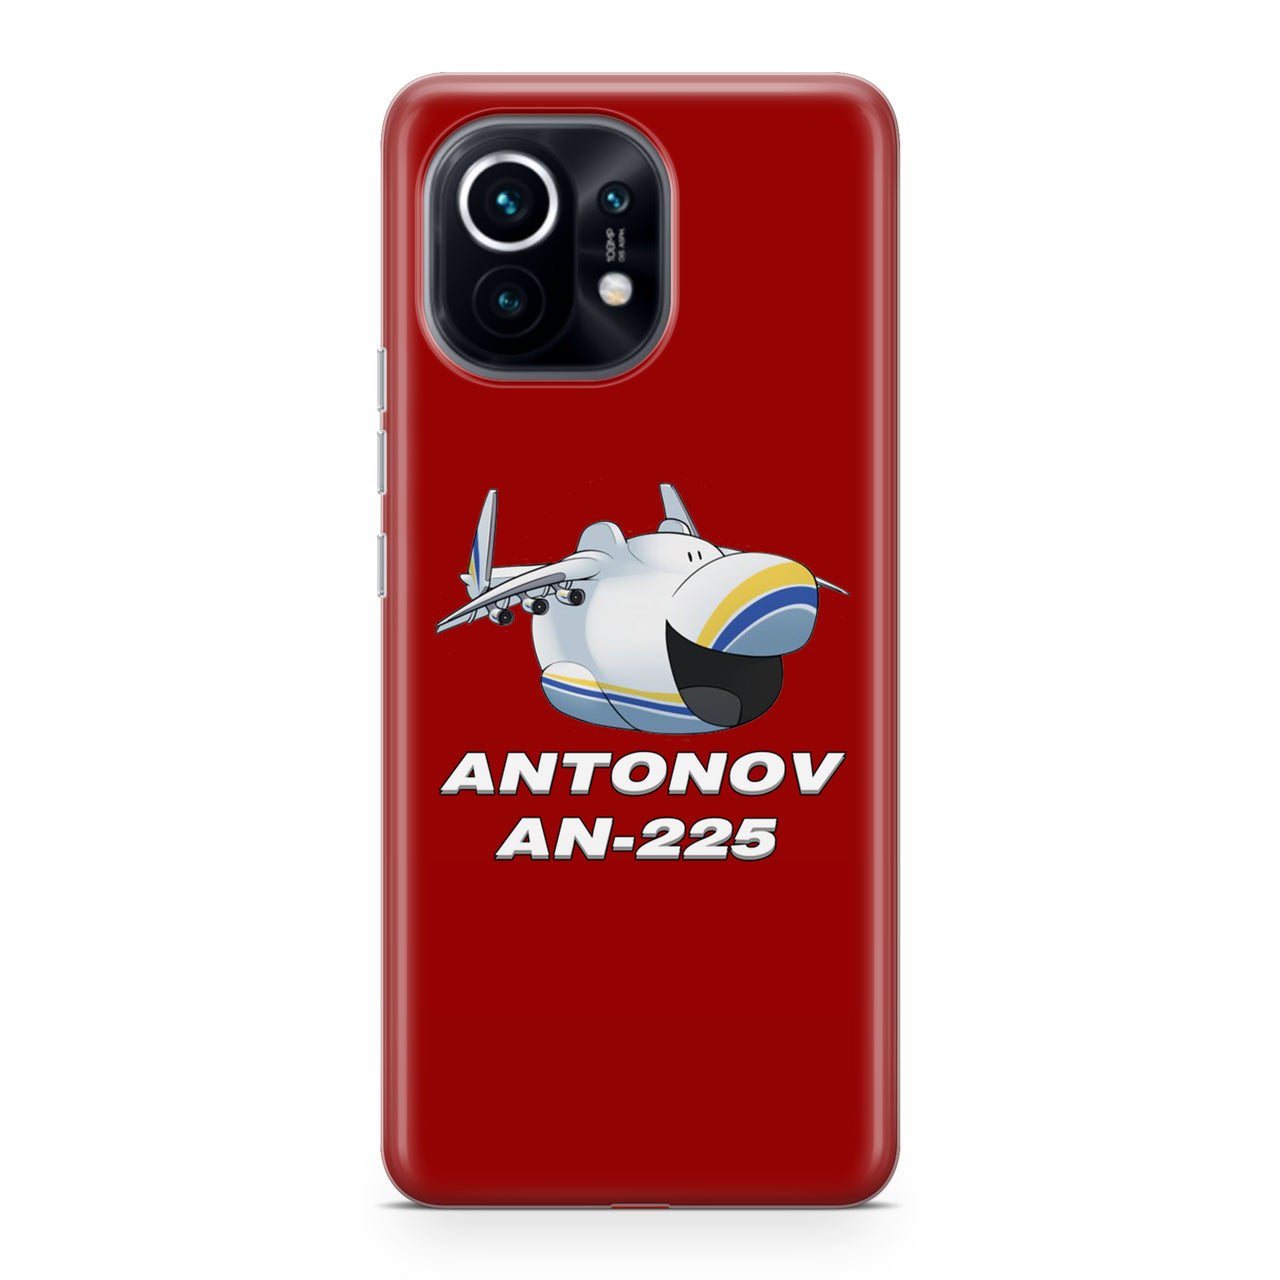 Antonov AN-225 (23) Designed Xiaomi Cases